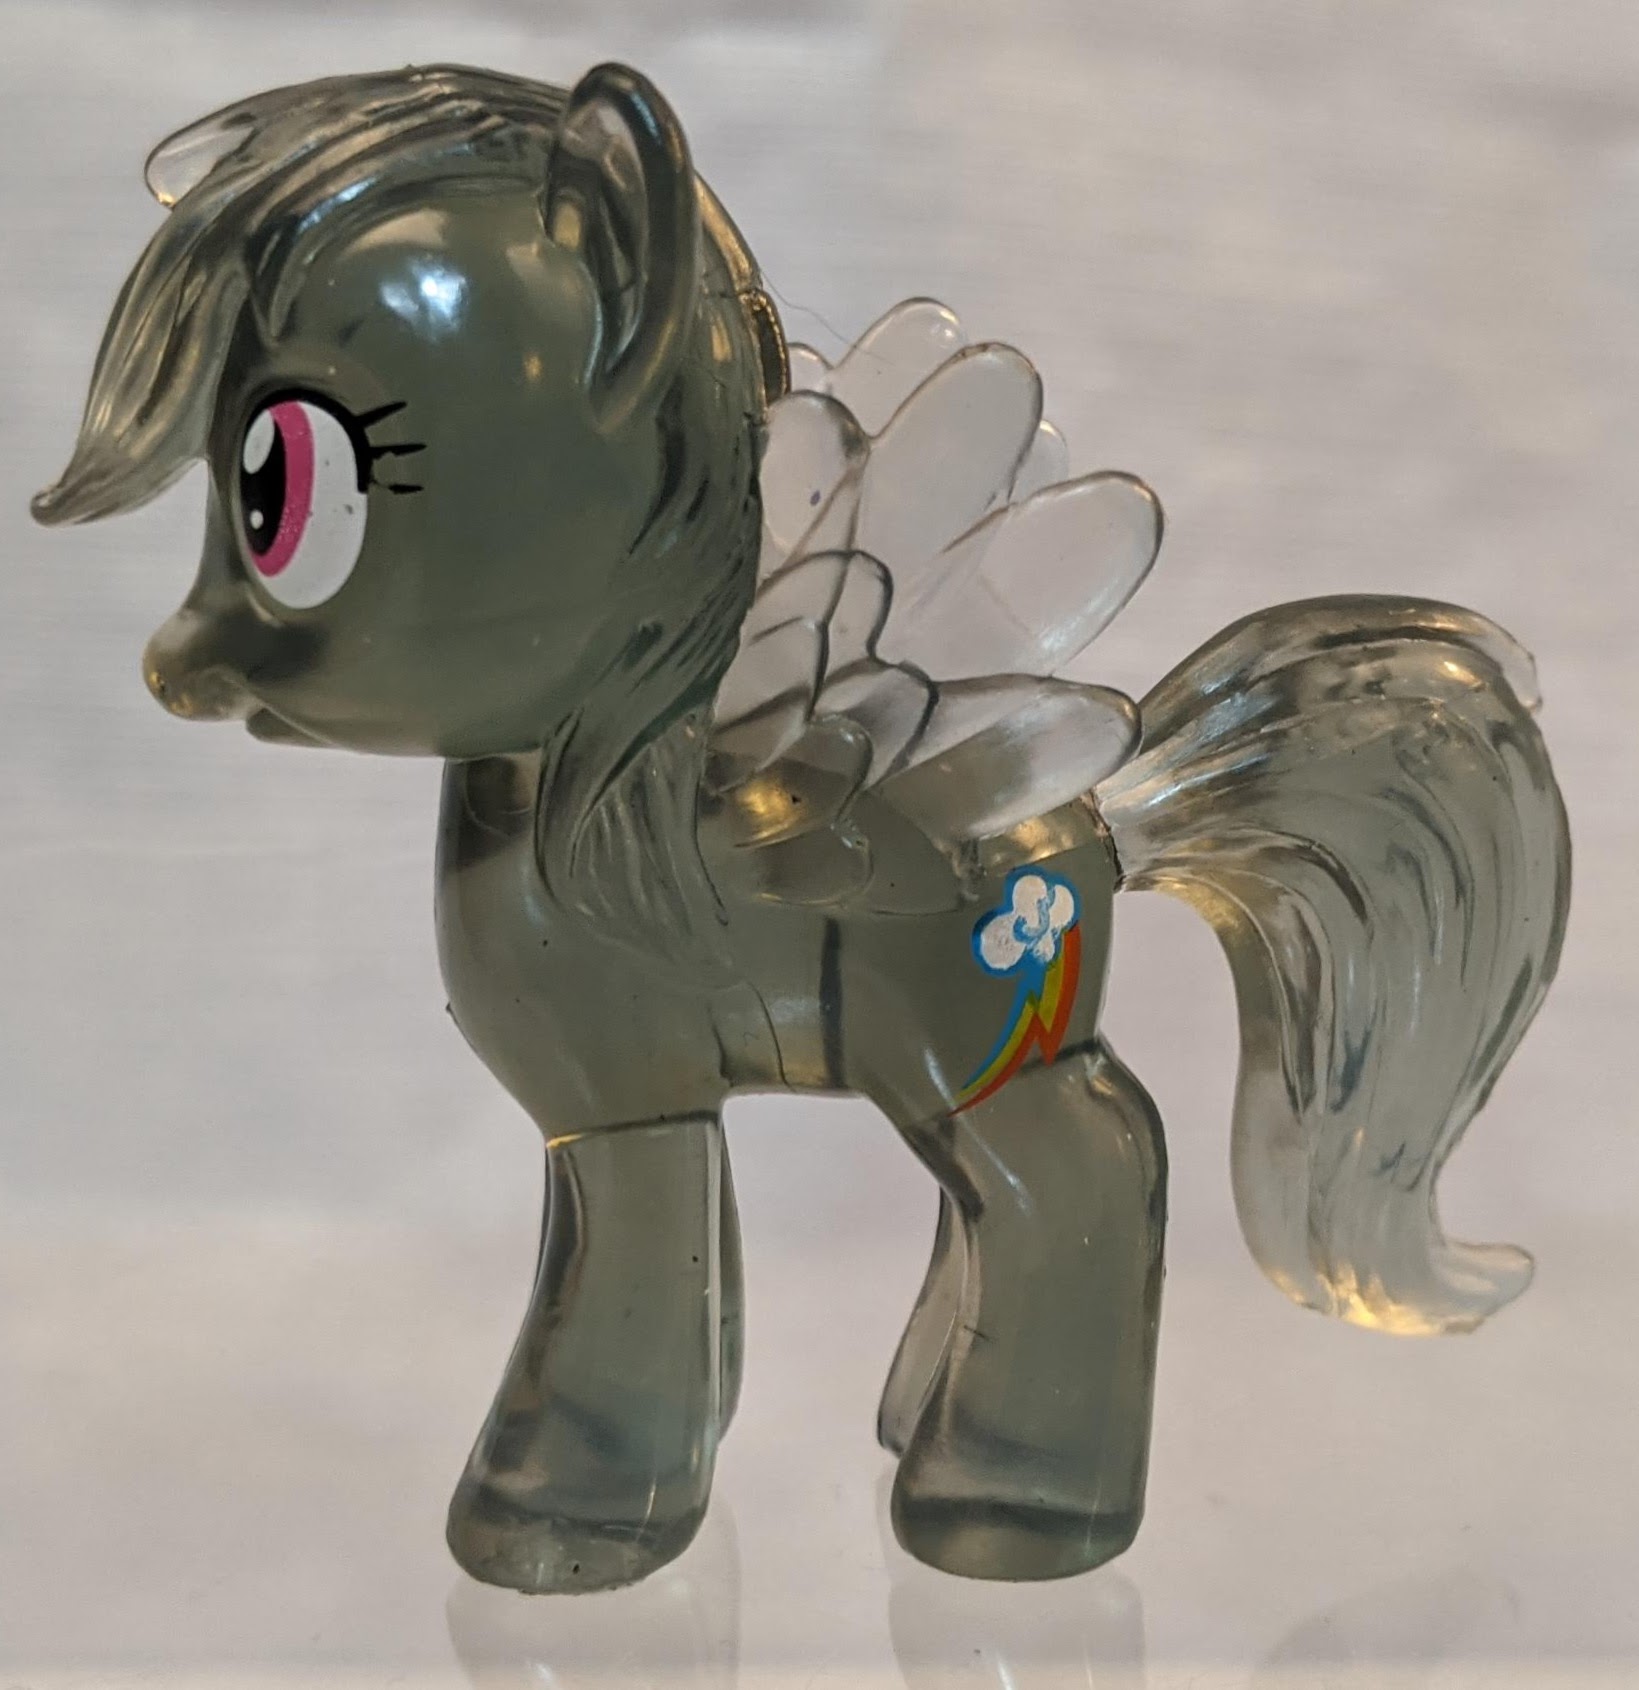 Hasbro 13 Plush Flyer Squeaker My Little Pony Rainbow Dash Dog